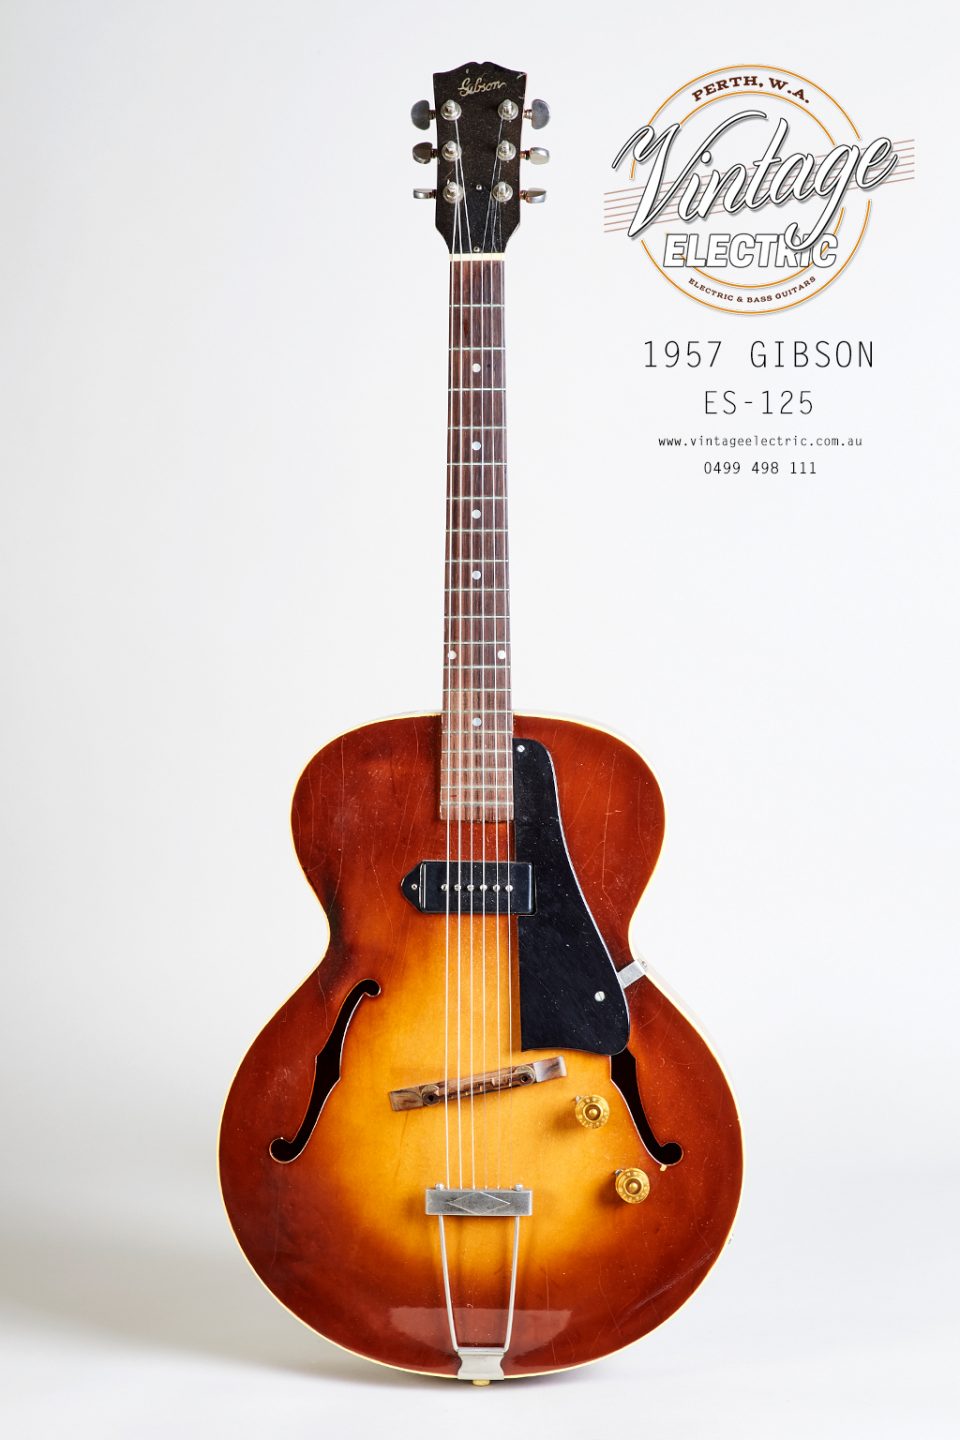 1957 Gibson ES-125 USA Guitar